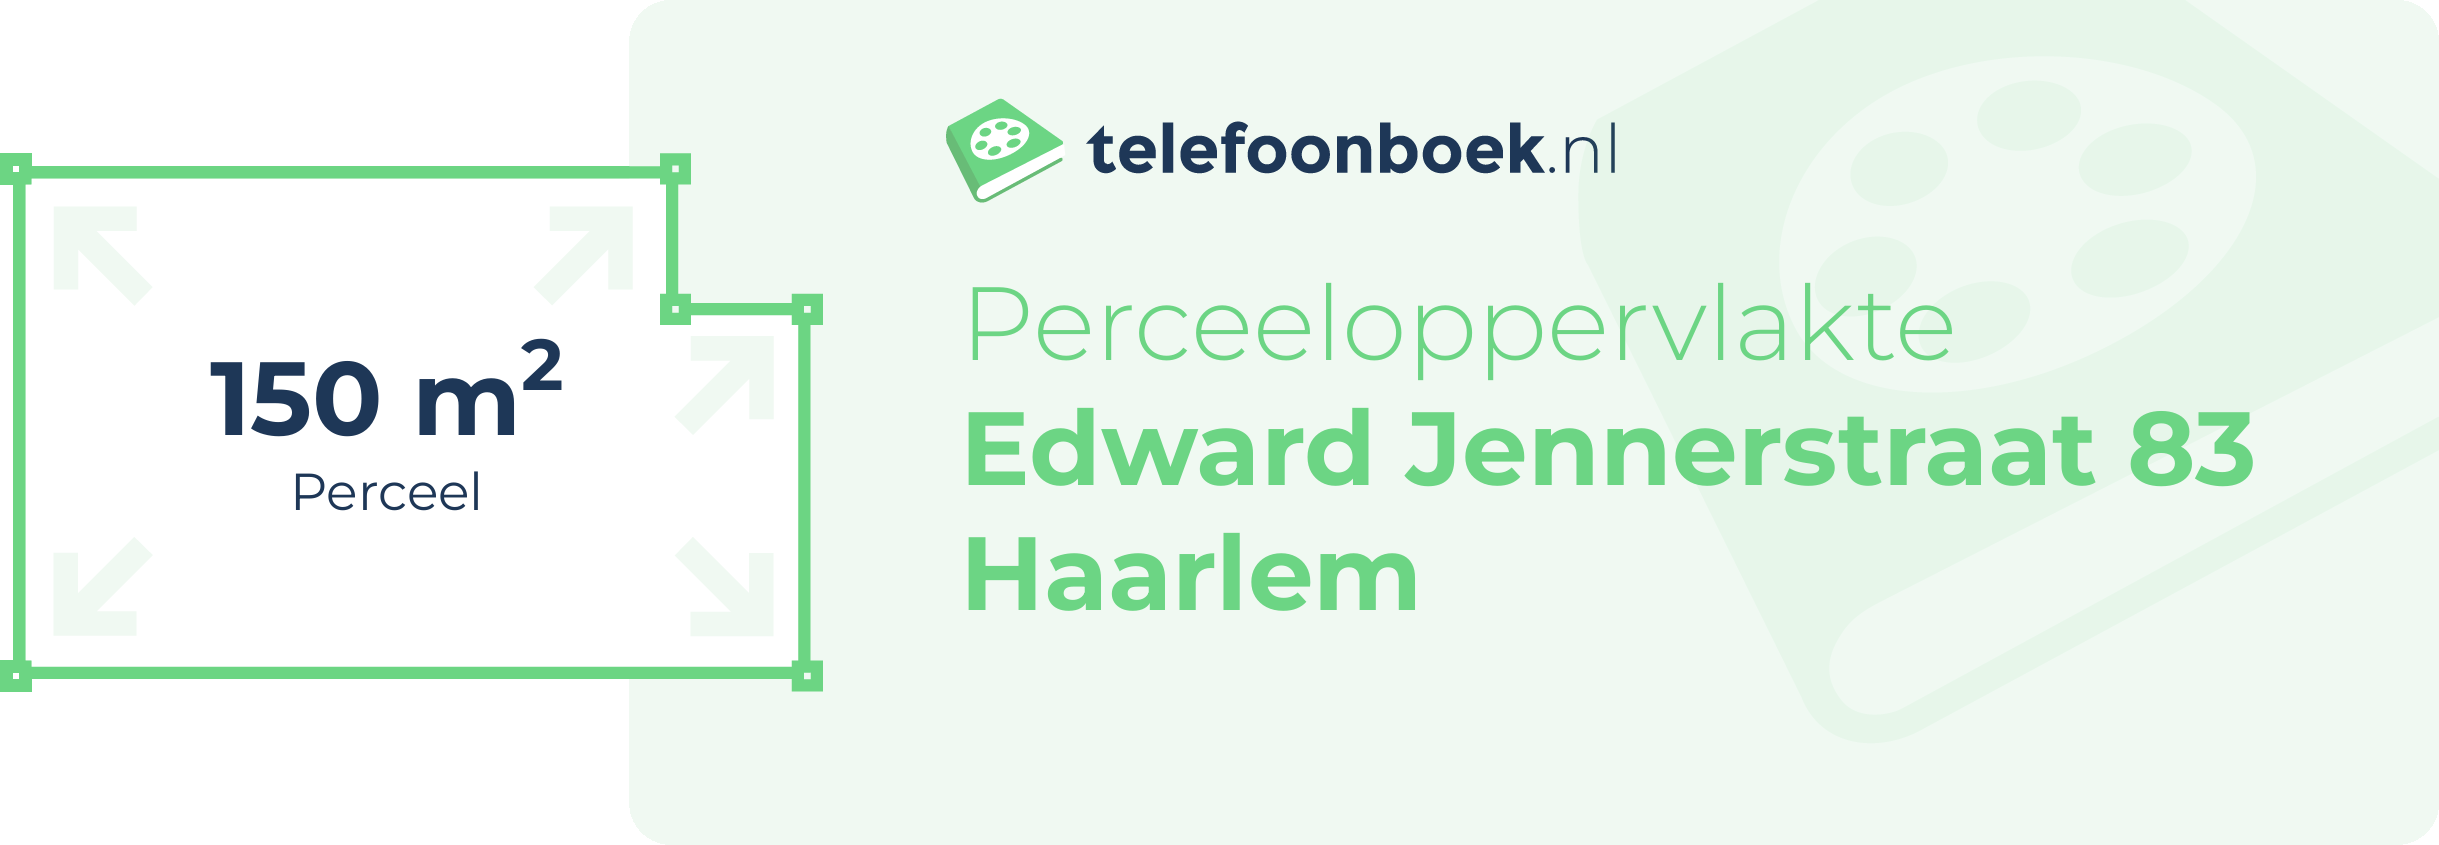 Perceeloppervlakte Edward Jennerstraat 83 Haarlem